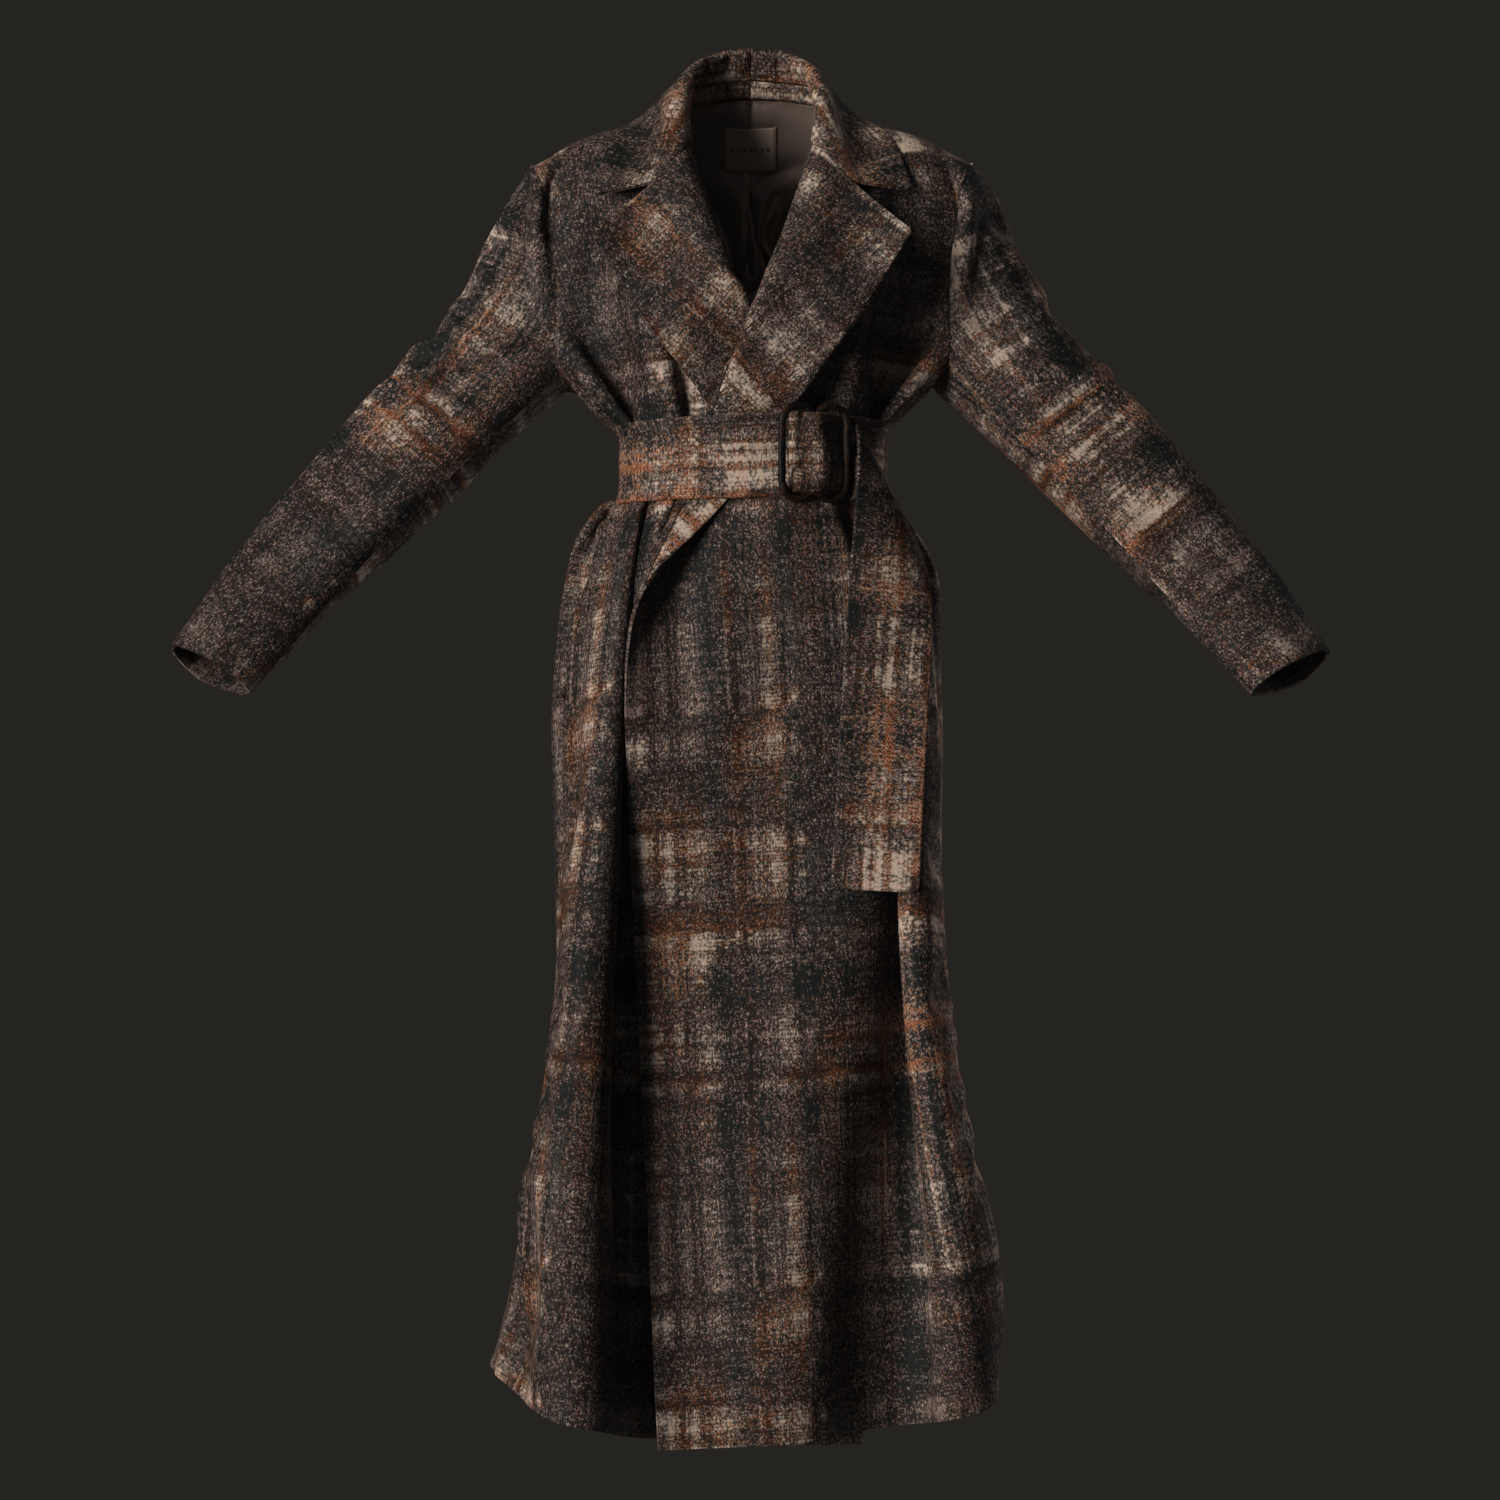 Digital plaid coat